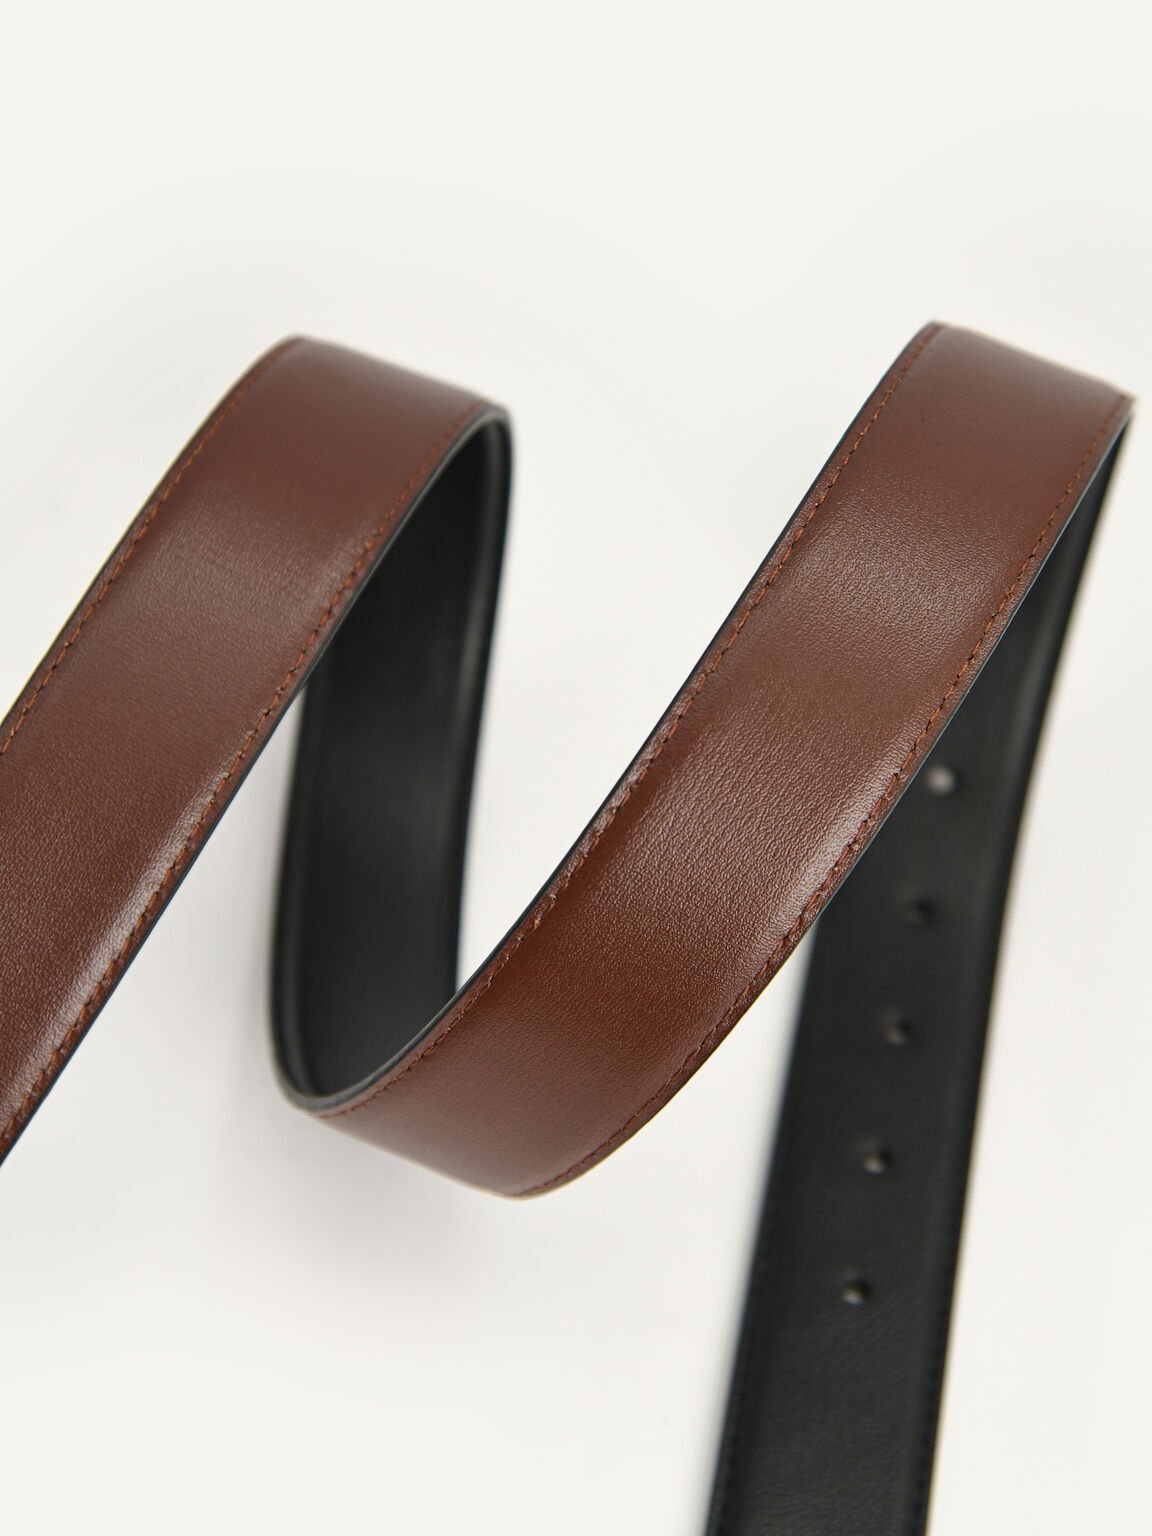 Reversible Embossed Leather Belt, Black